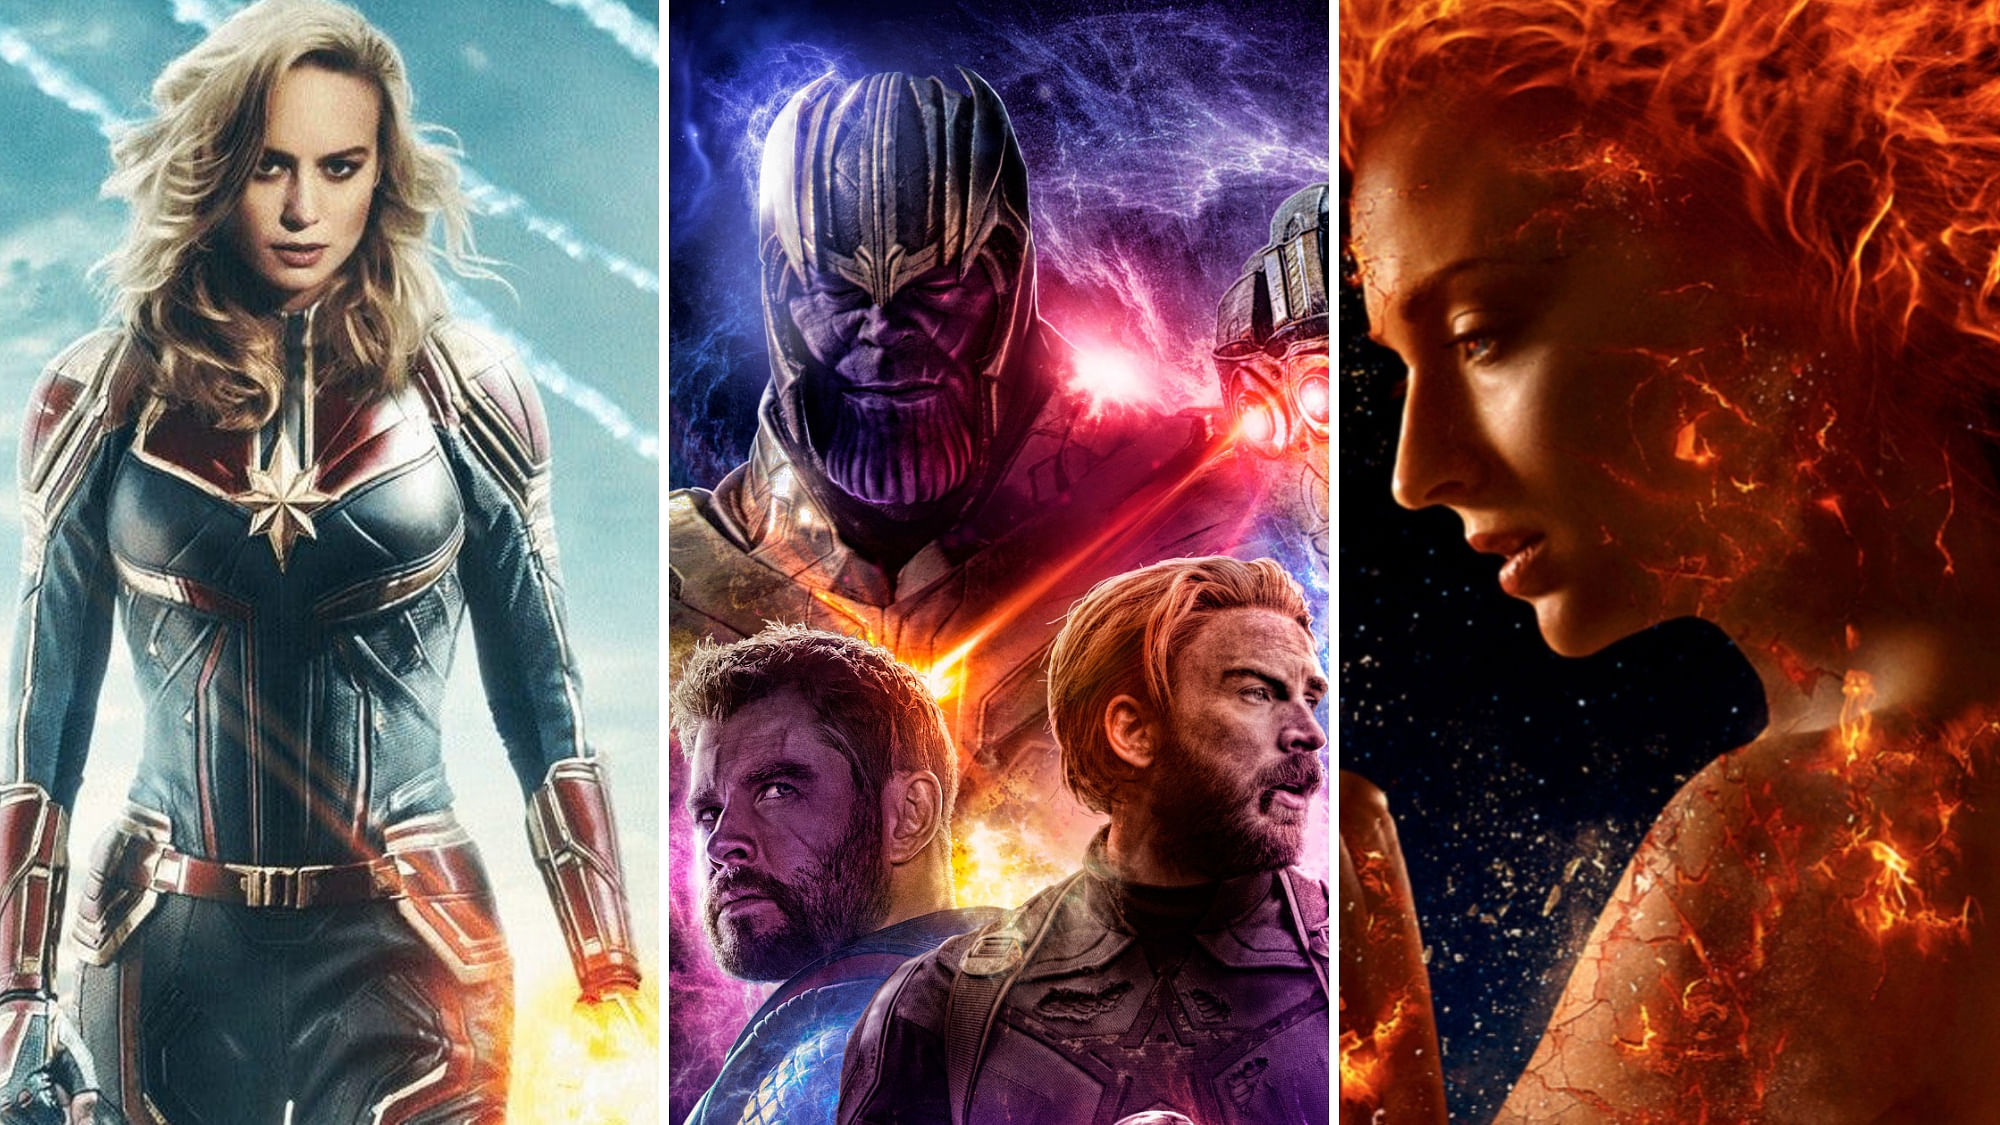 Posters of <i>Captain Marvel</i>, <i>Avengers: Endgame</i> and <i>X-Men: Dark Phoenix</i>.